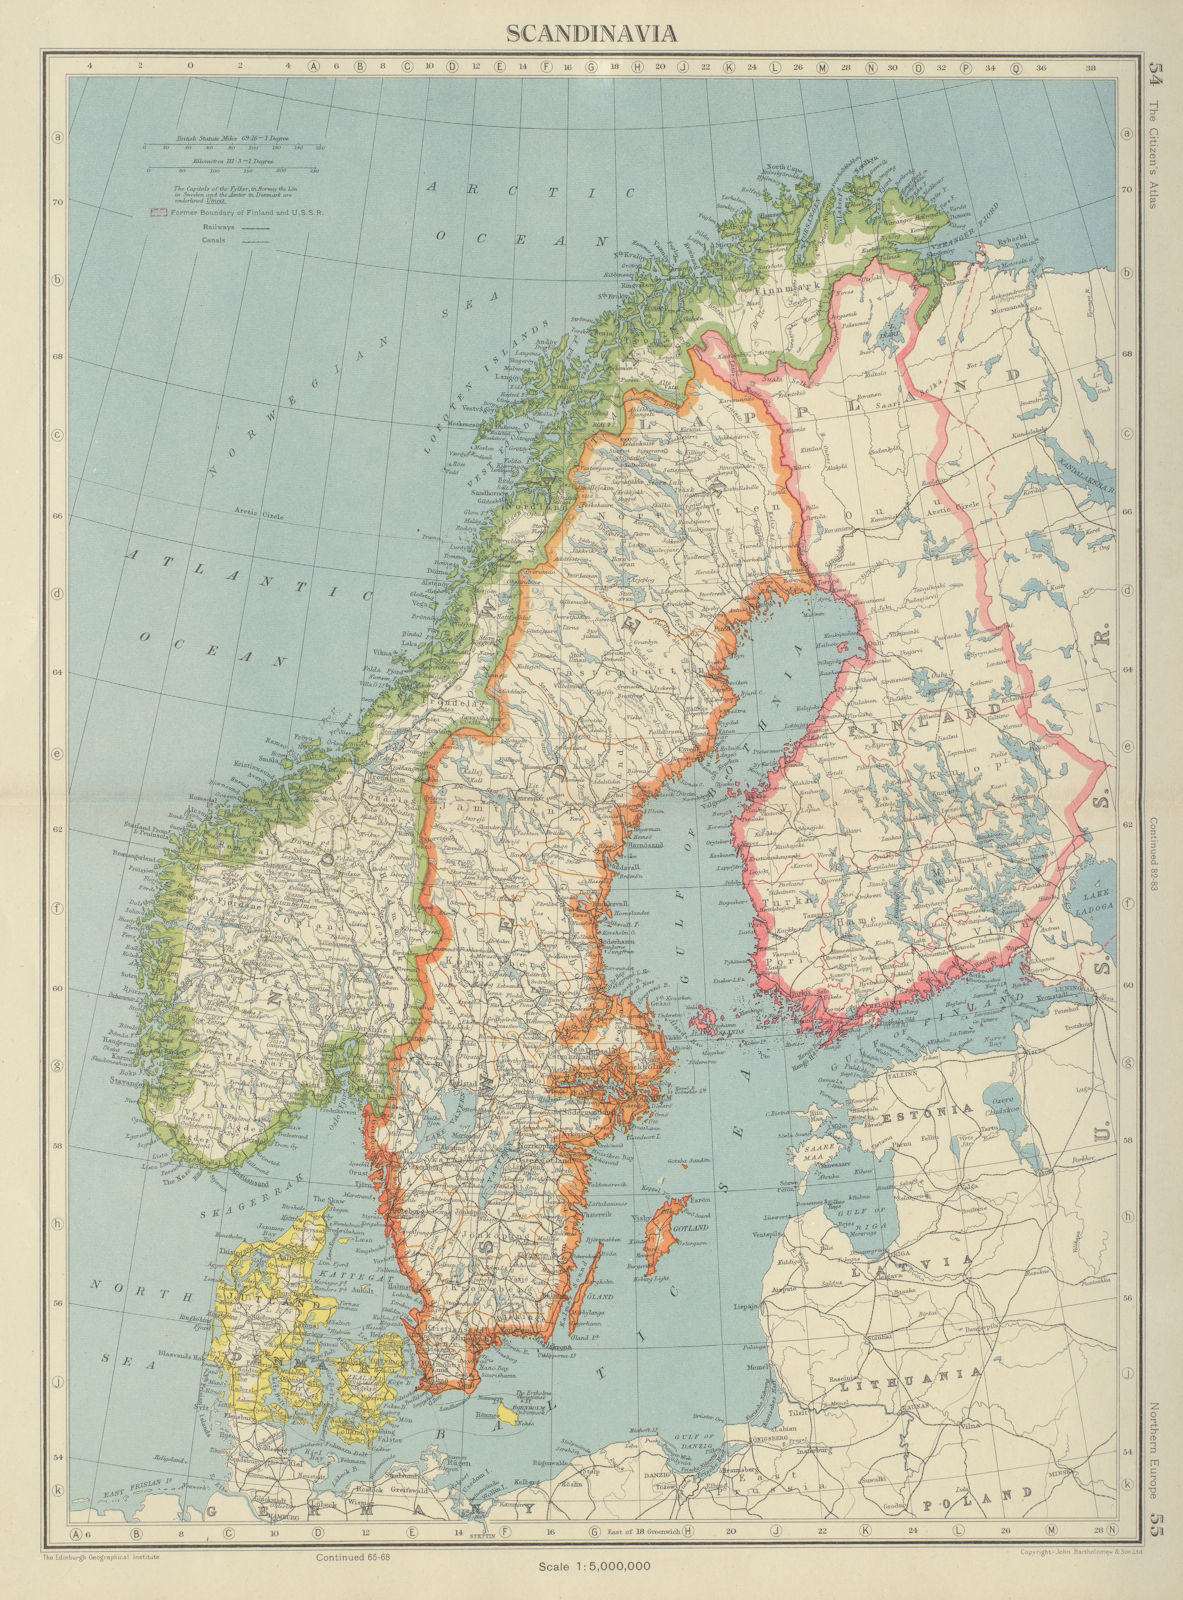 Associate Product SCANDINAVIA. Sweden Norway Denmark Finland (shows < 1940 borders)  1947 map